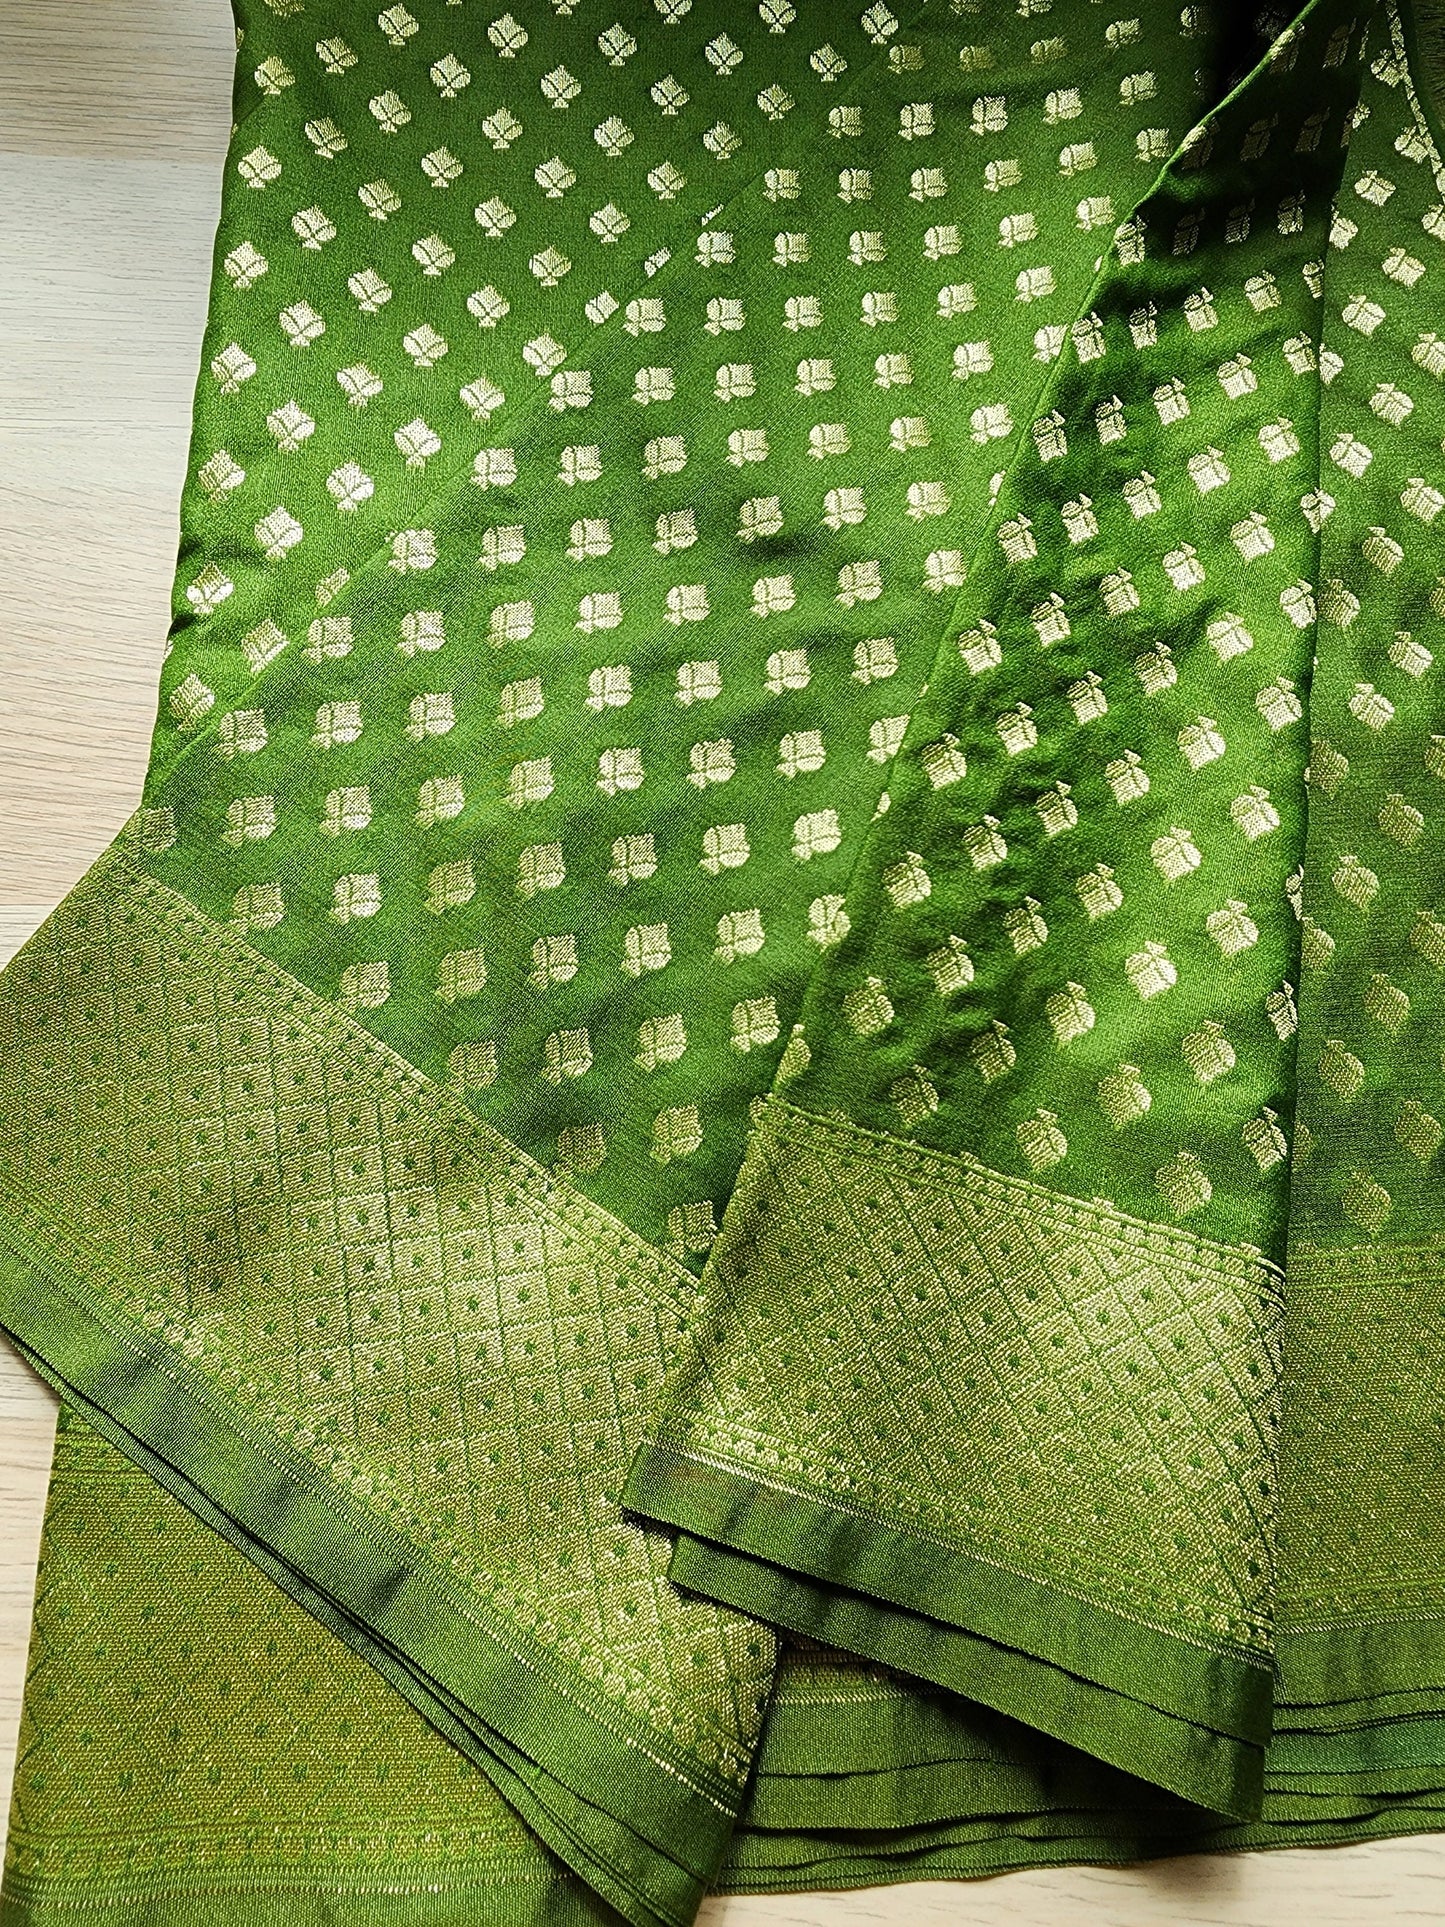 Banarasi Silk Light Green Dupatta with gold handweaving, Indian traditional and Festive designer dupatta, luxurious soft Banarsi dupatta